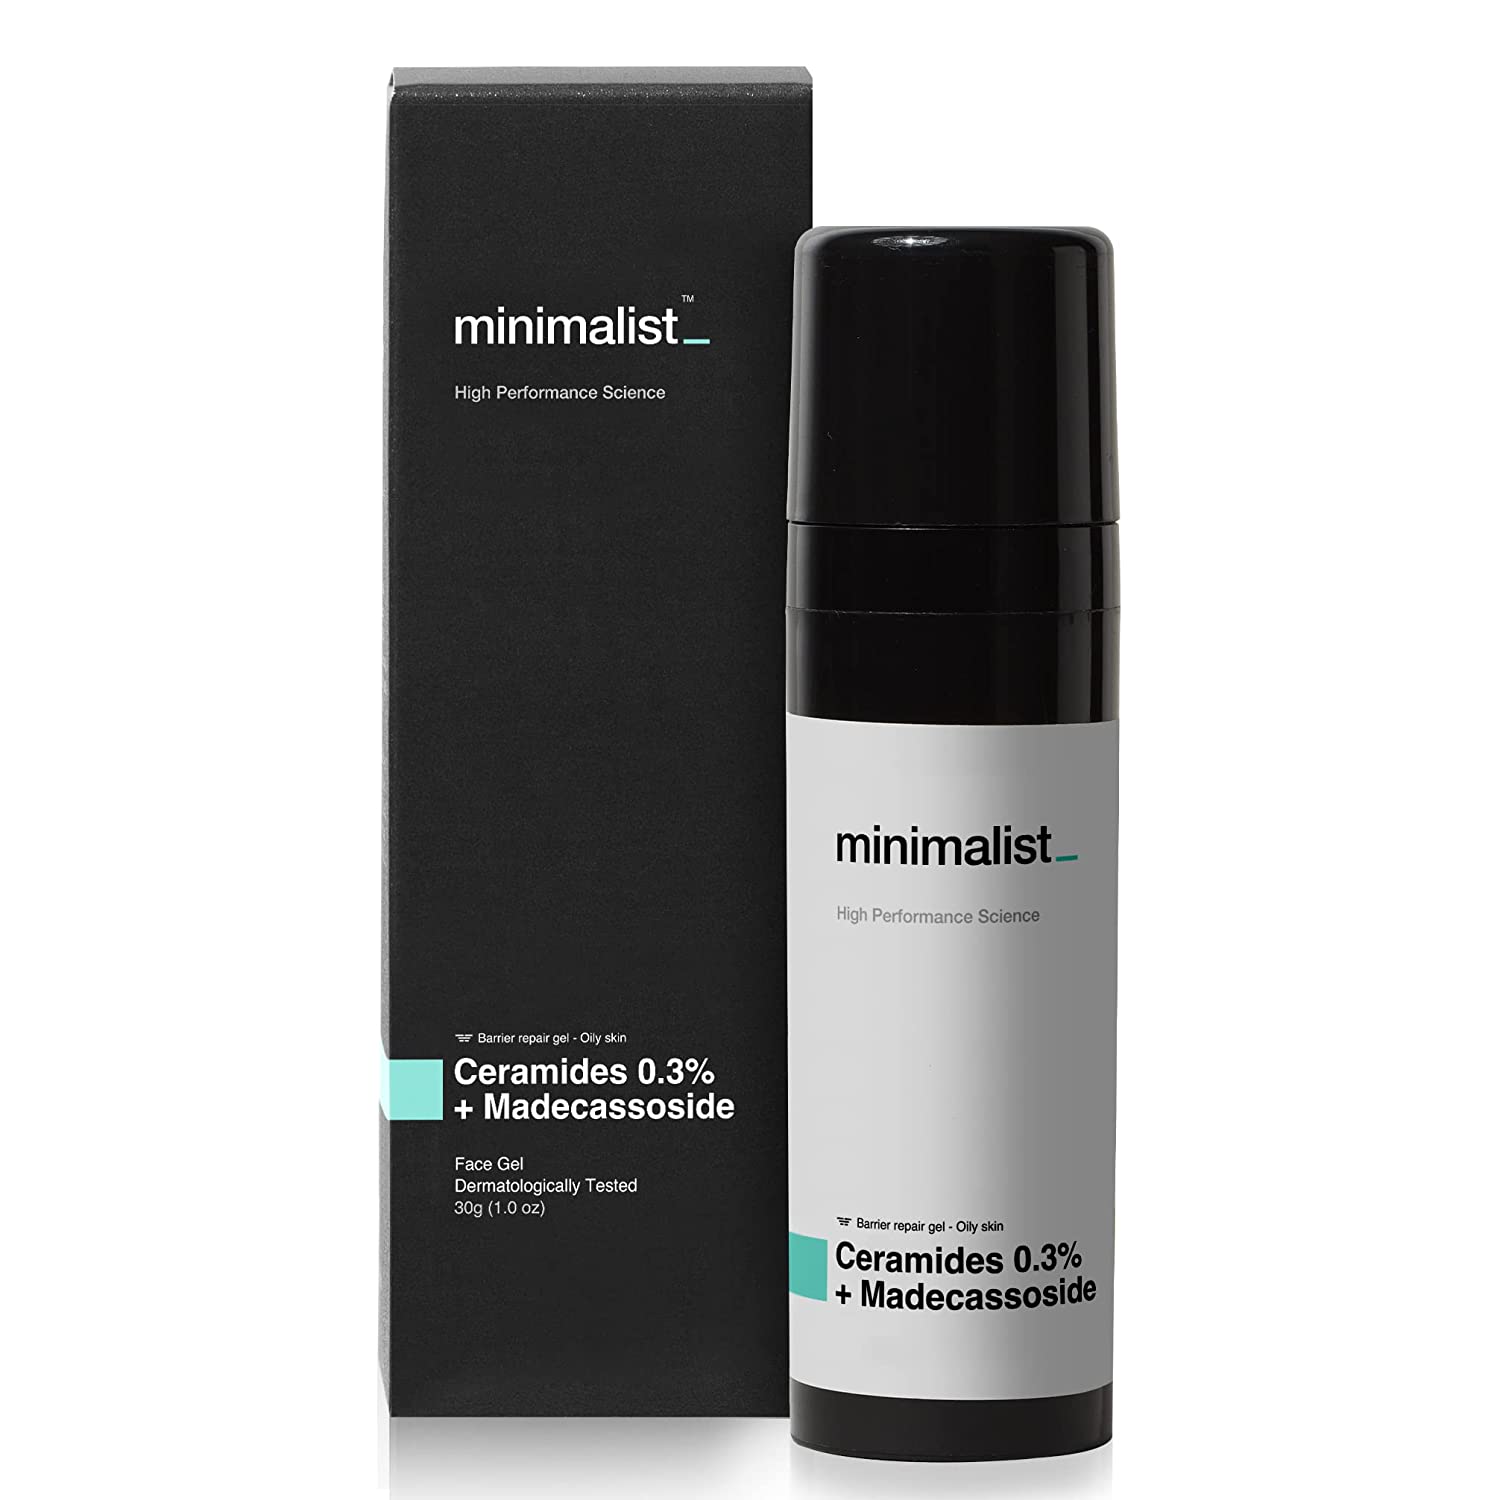 Minimalist 0.3% Ceramide Barrier Repair Moisturizing Cream For Oily Skin